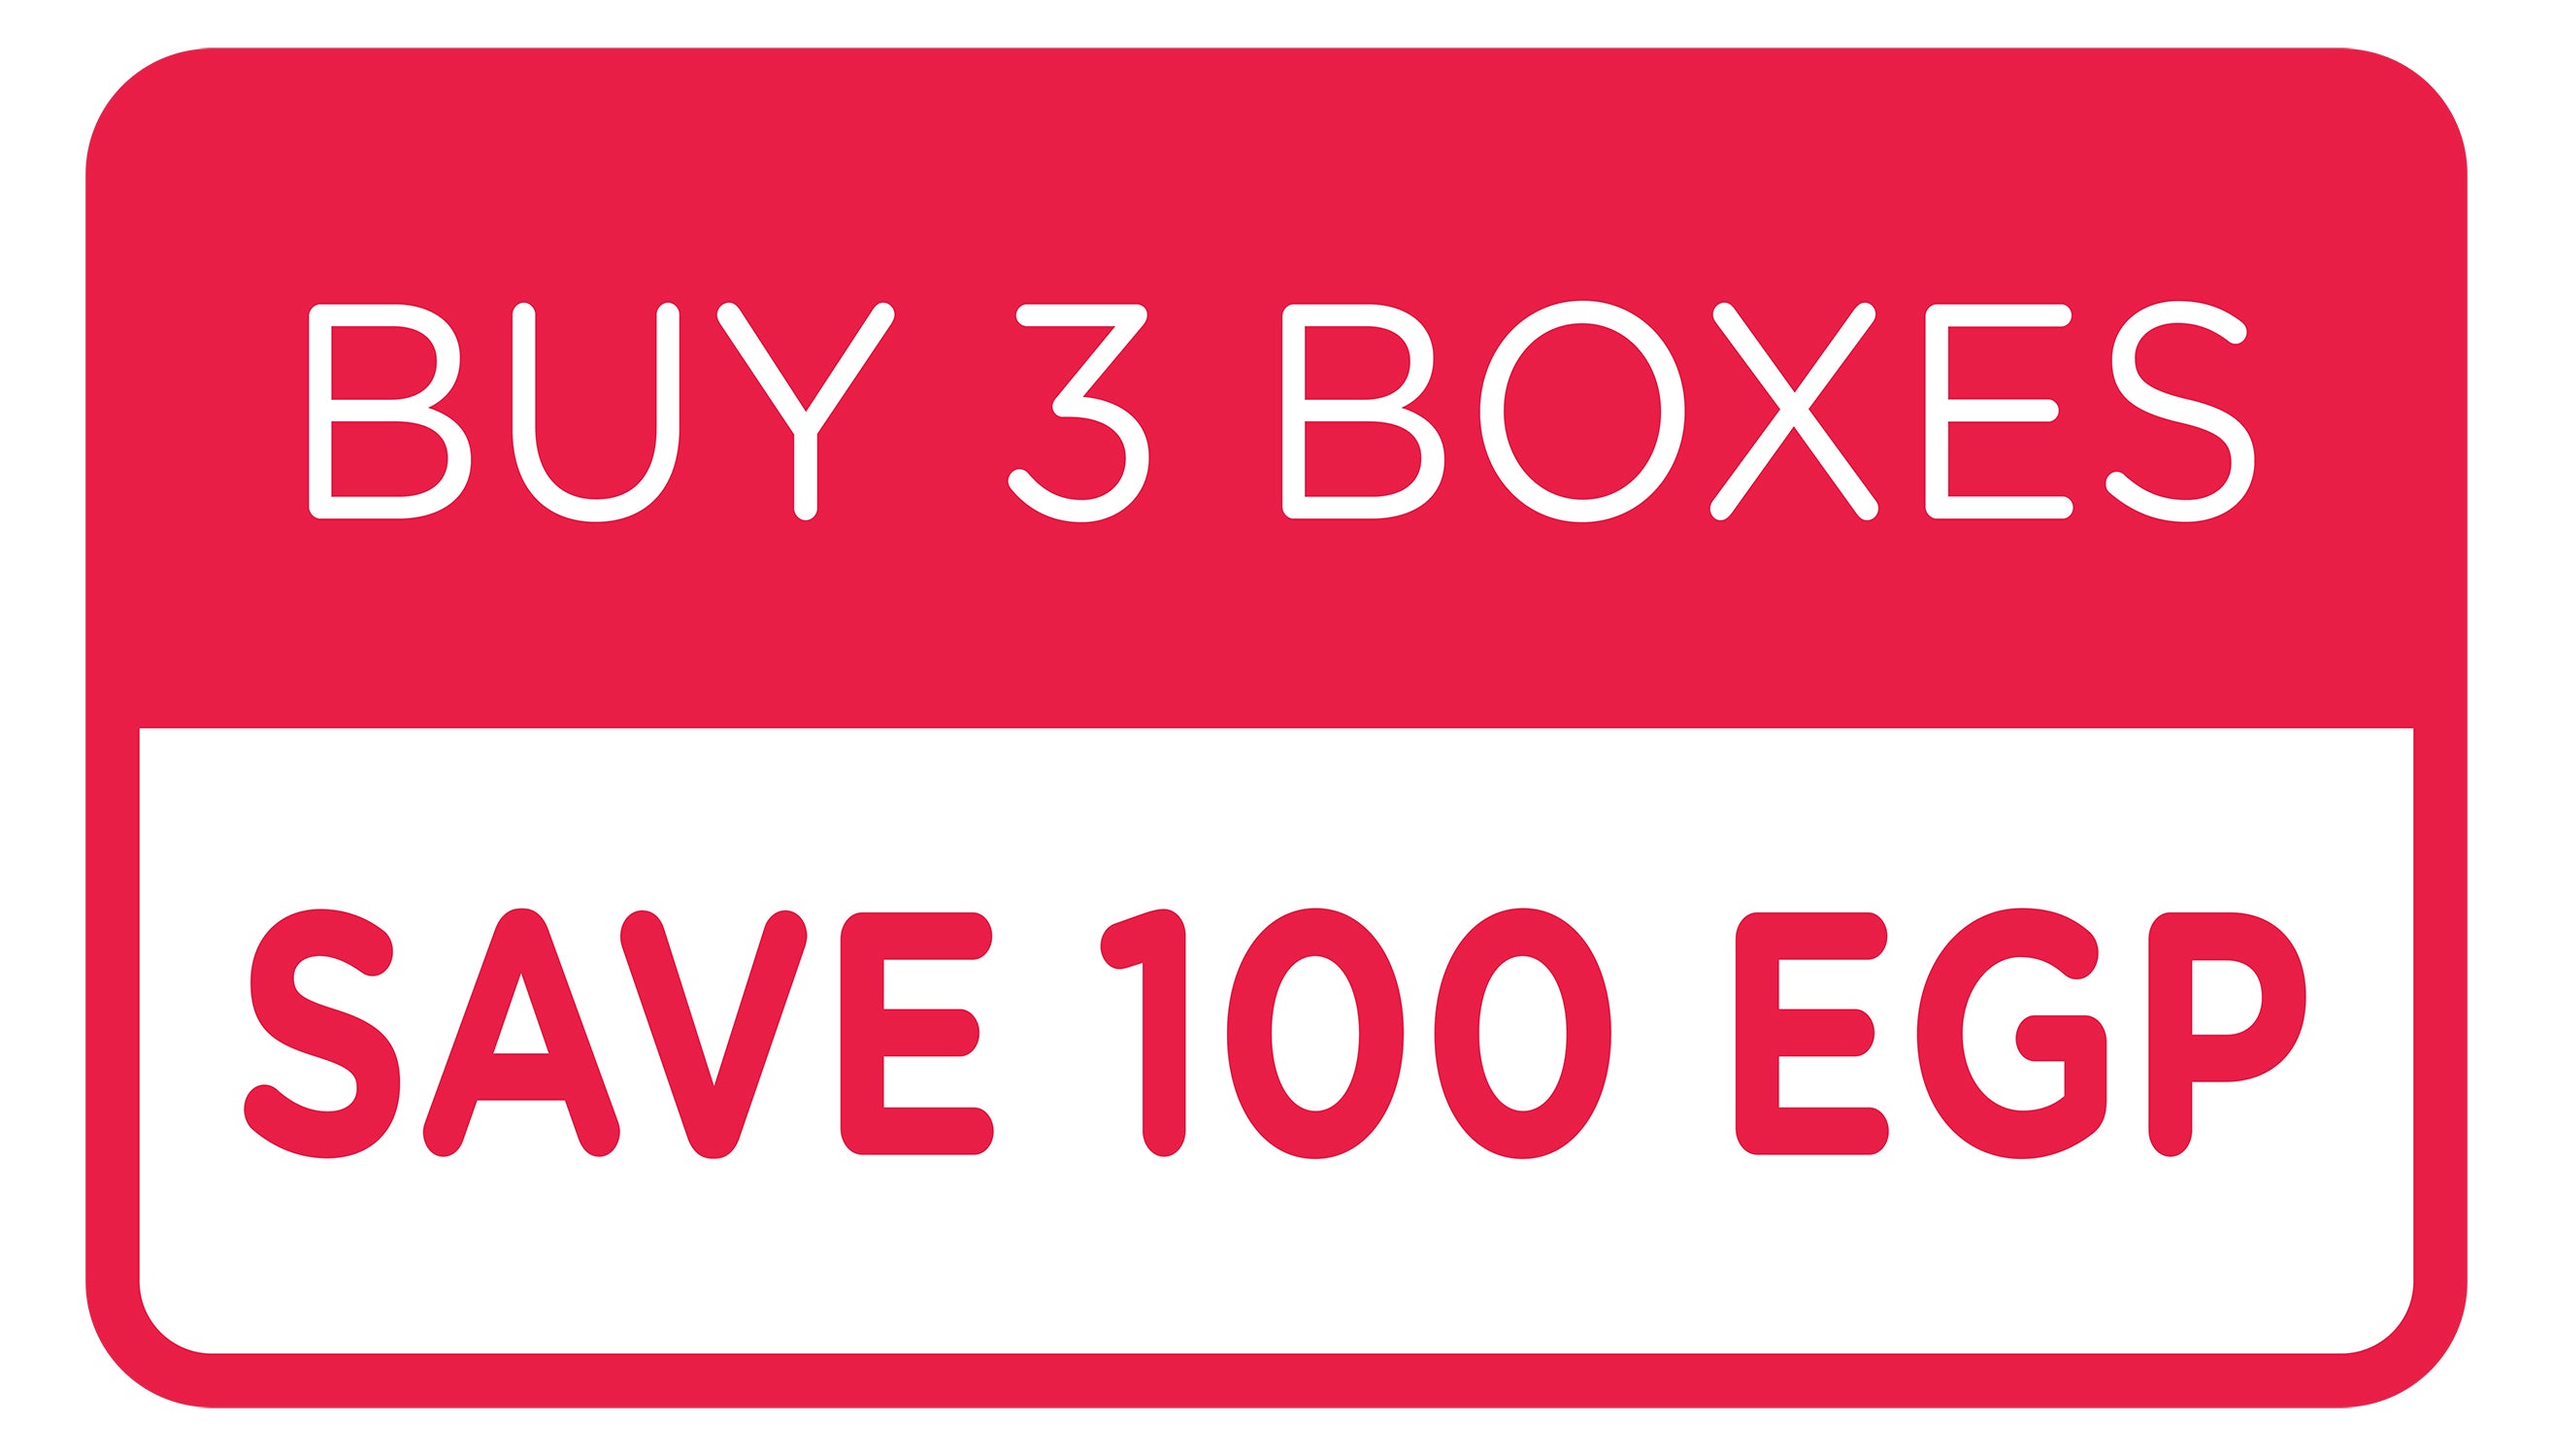 Buy 3 Boxes Save EGP 100